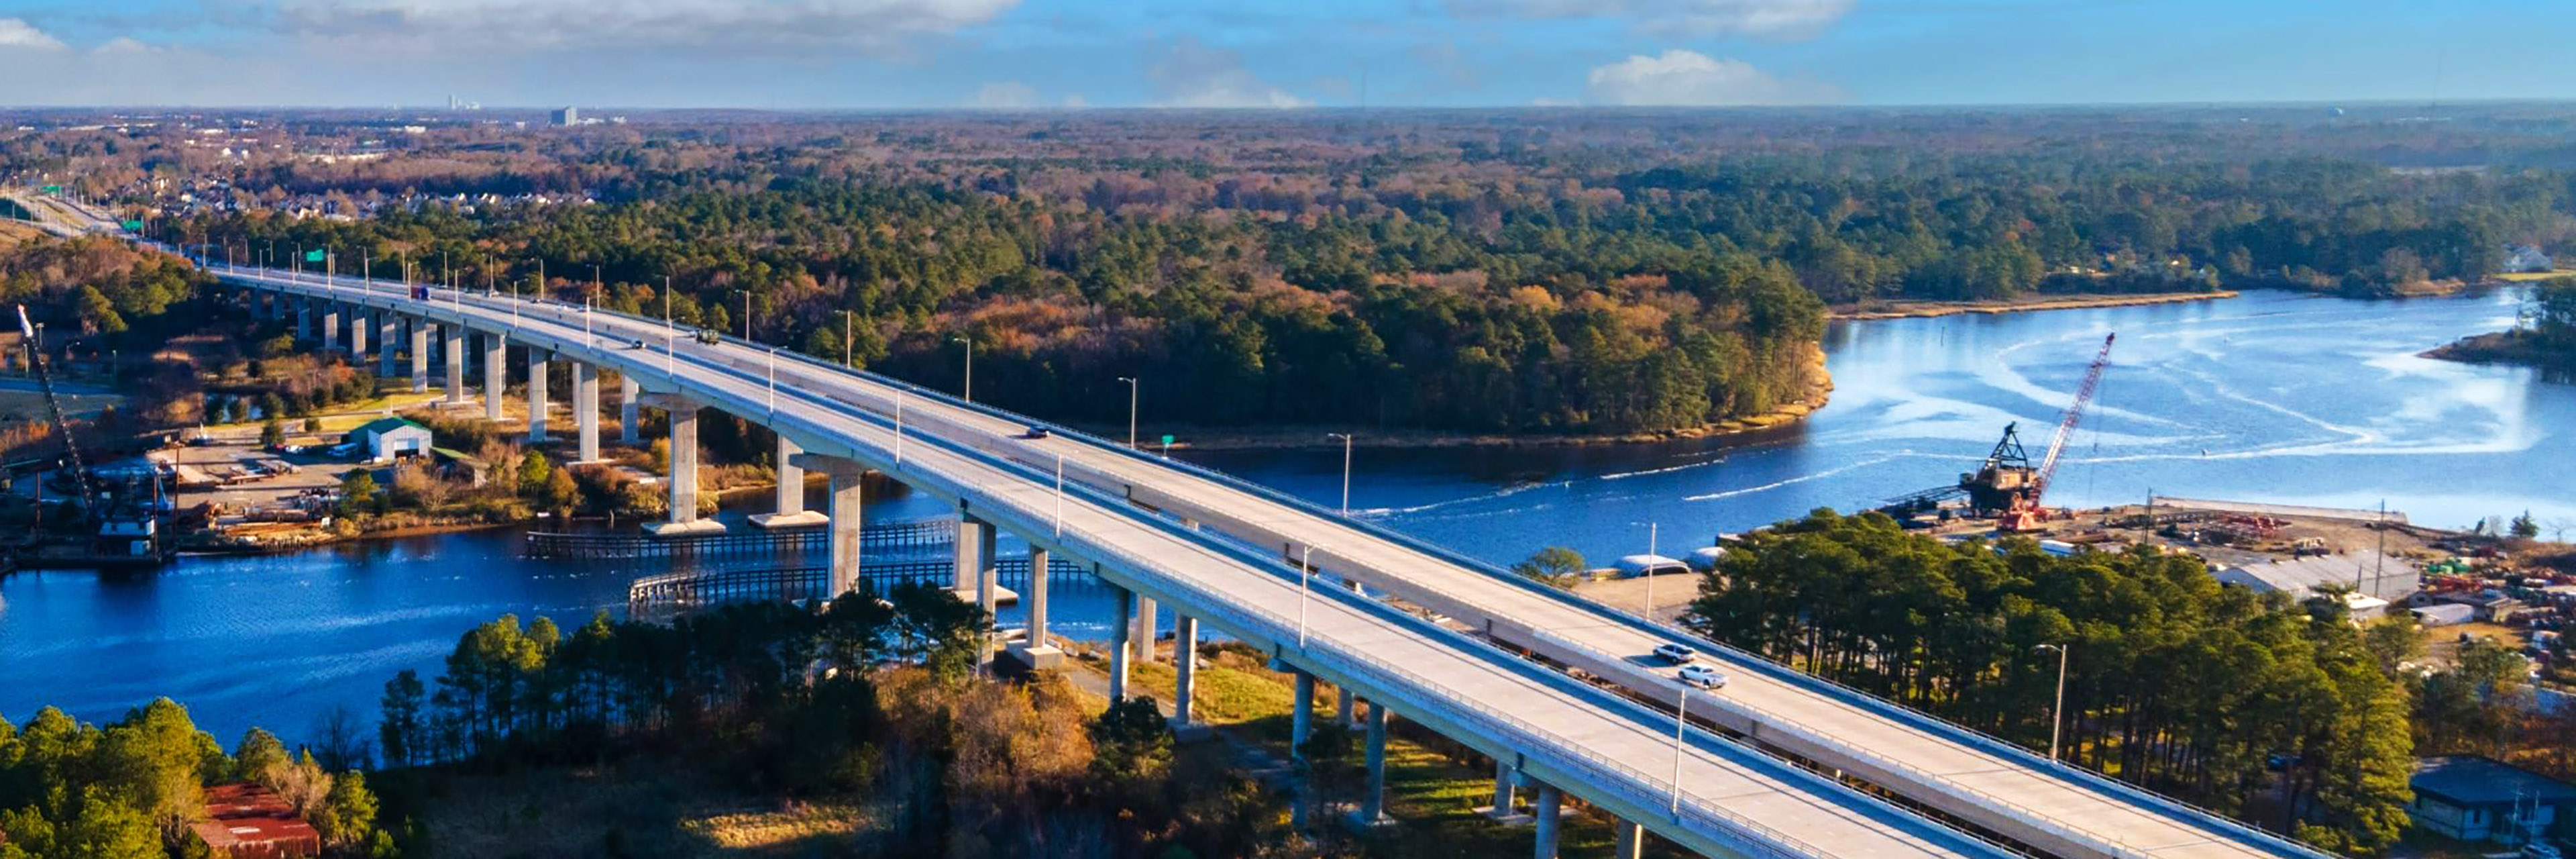 Chesapeake bridge